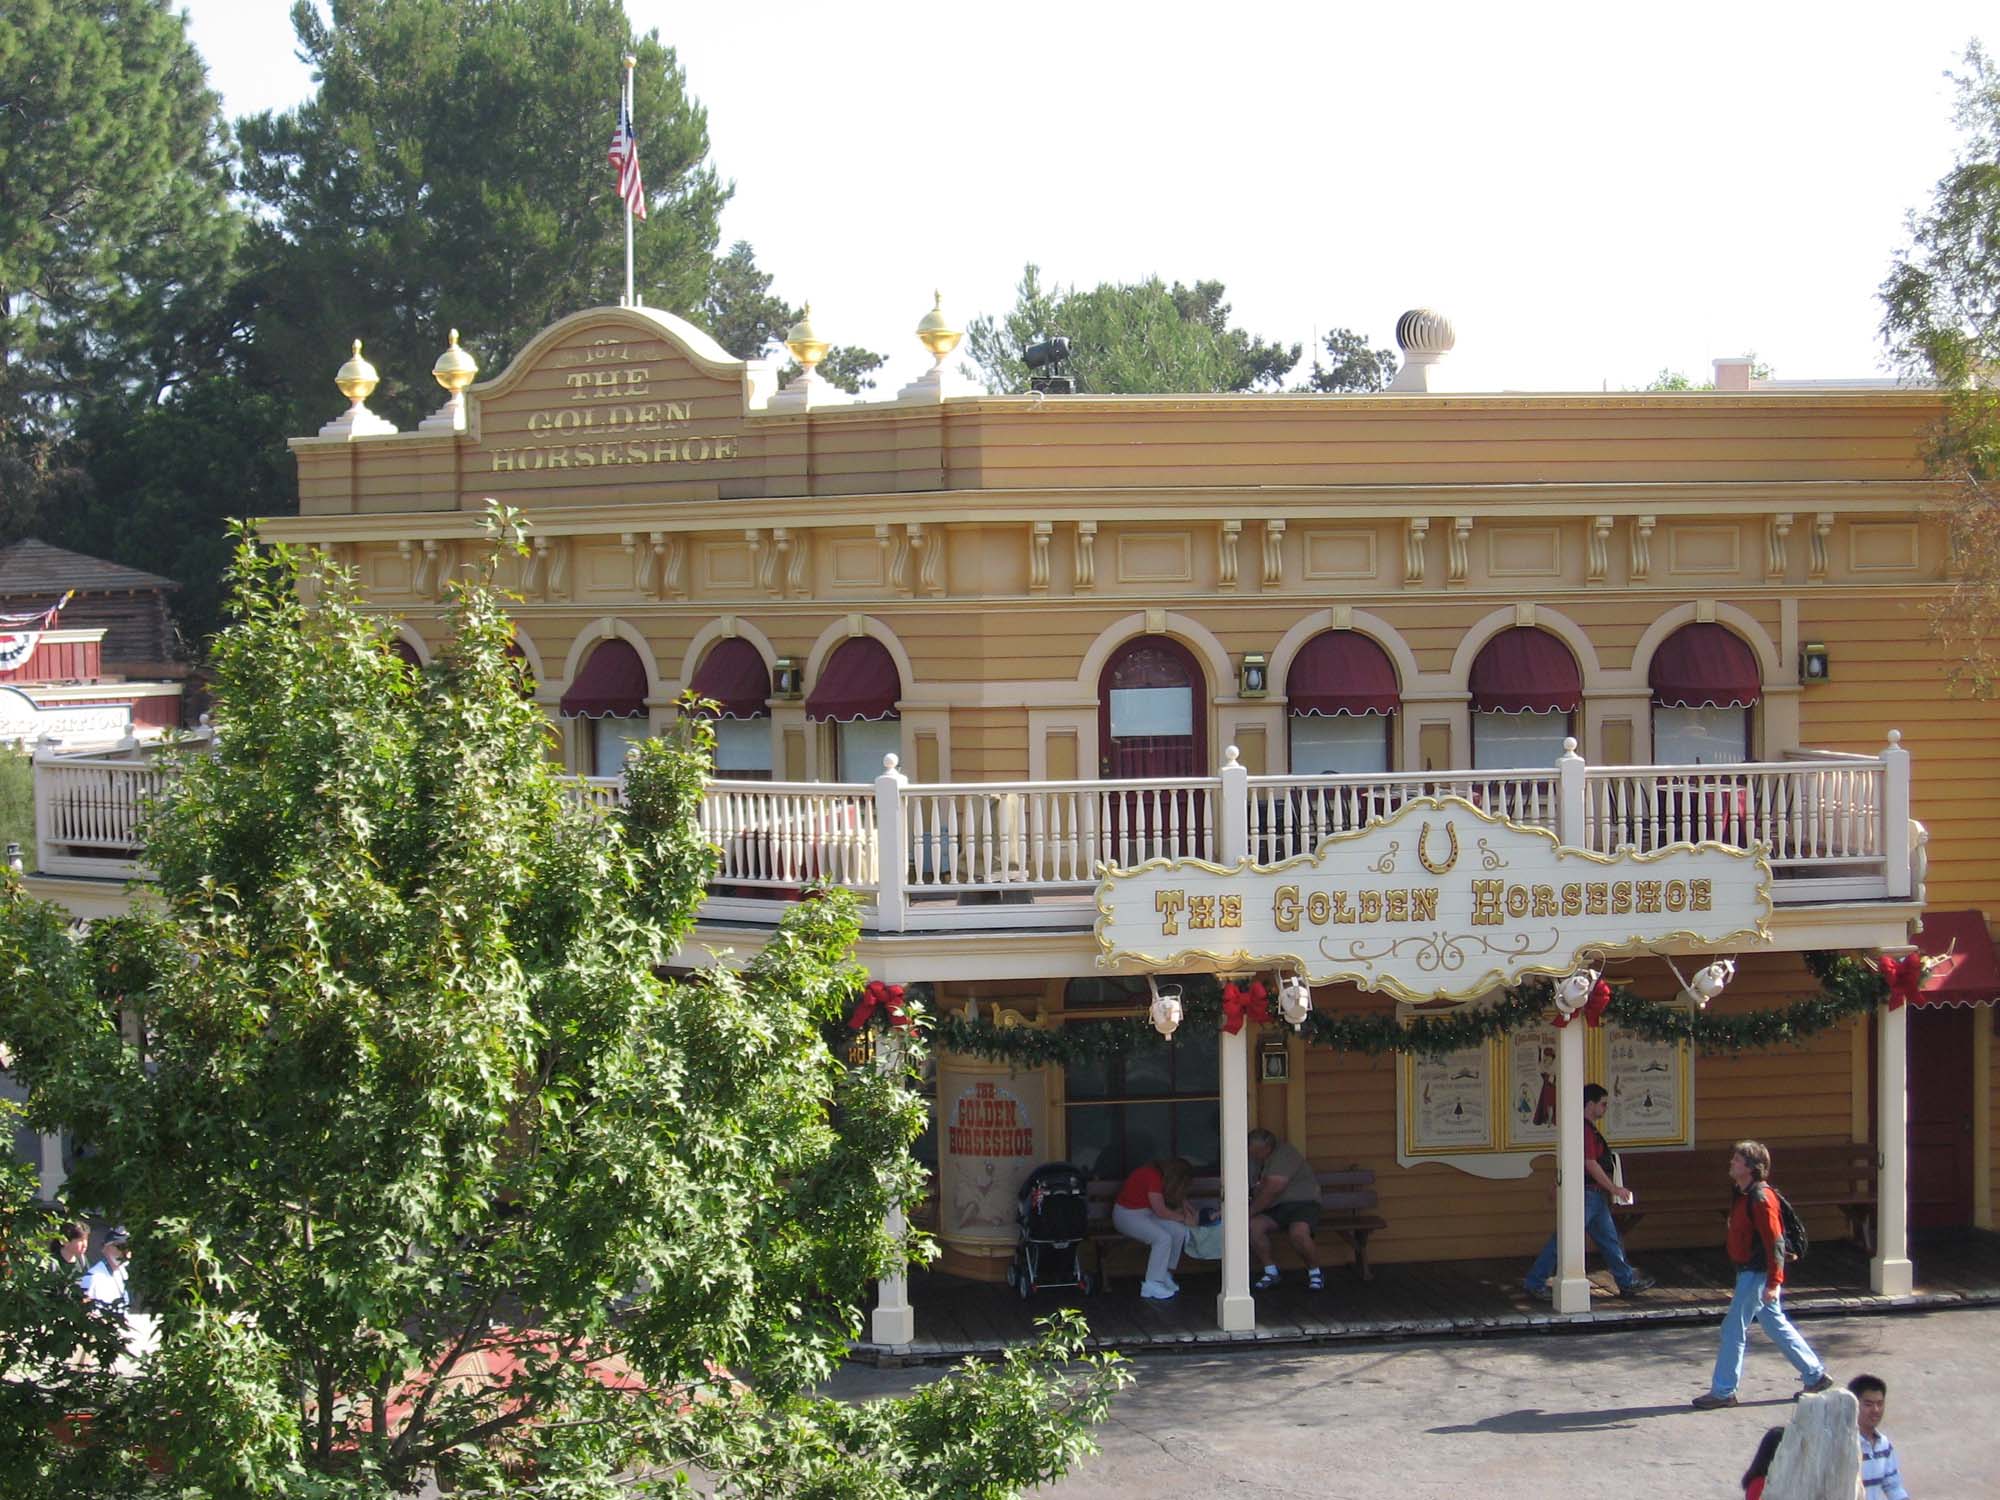 Disneyland - The Golden Horseshoe